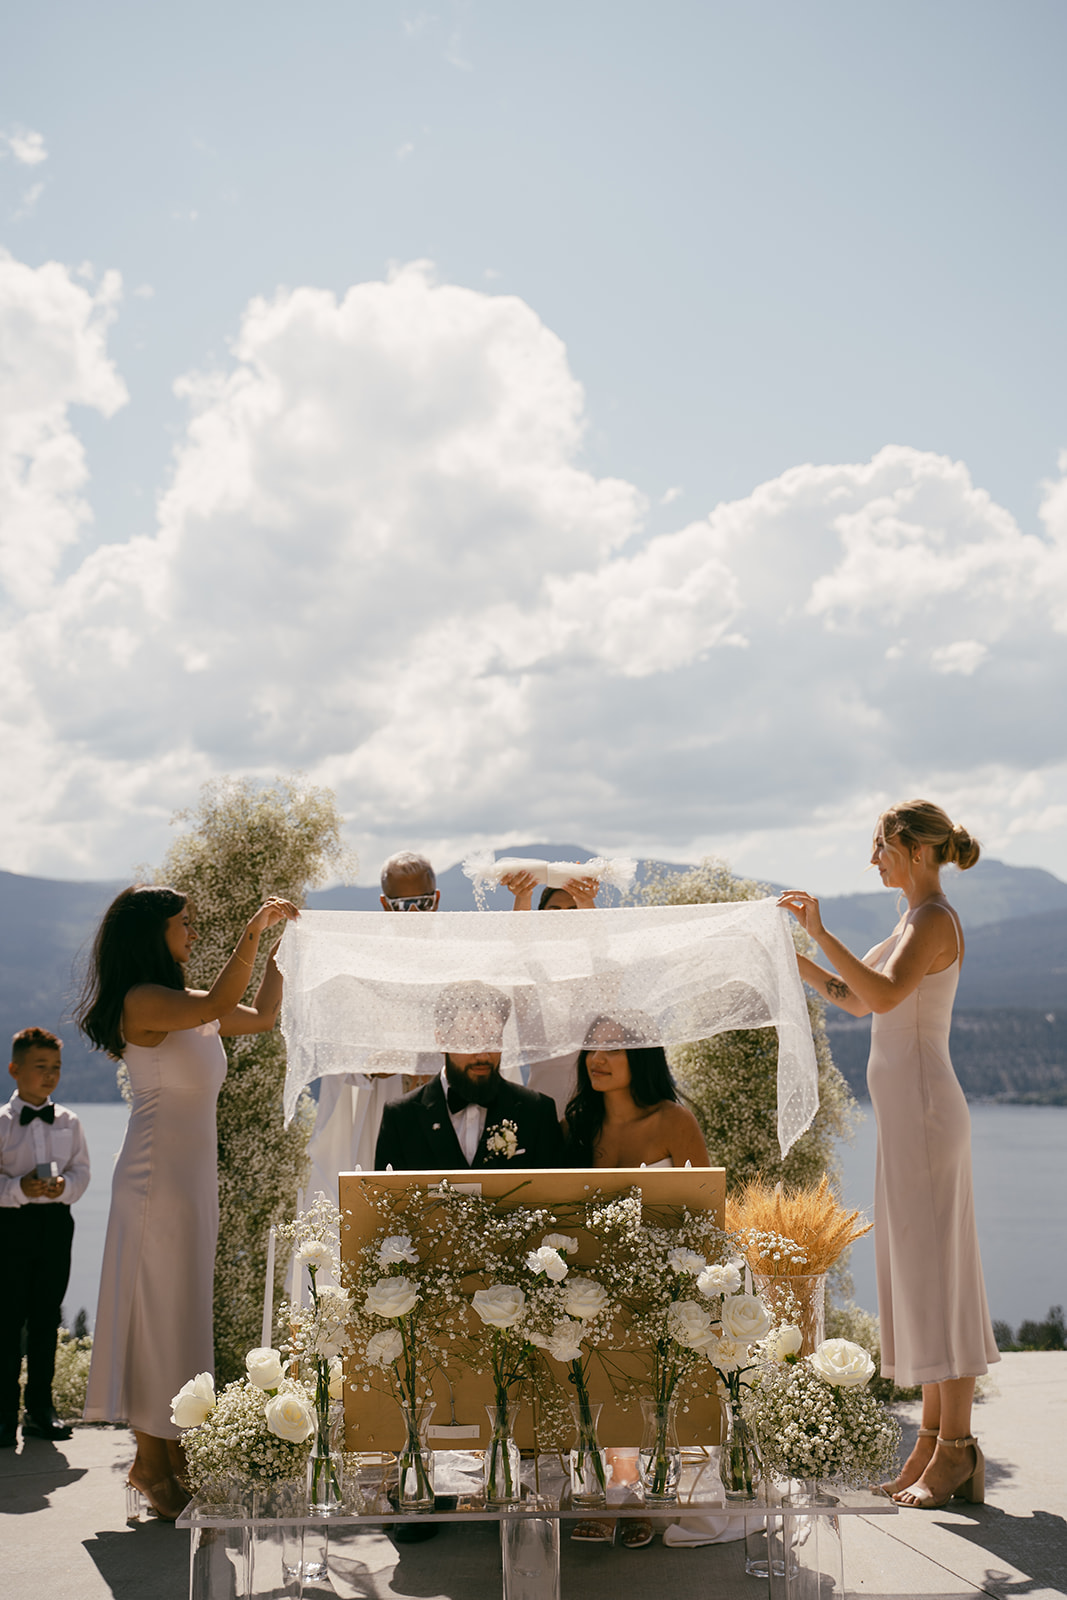 Persian Wedding Ceremony in Vineyard overlooking a lake